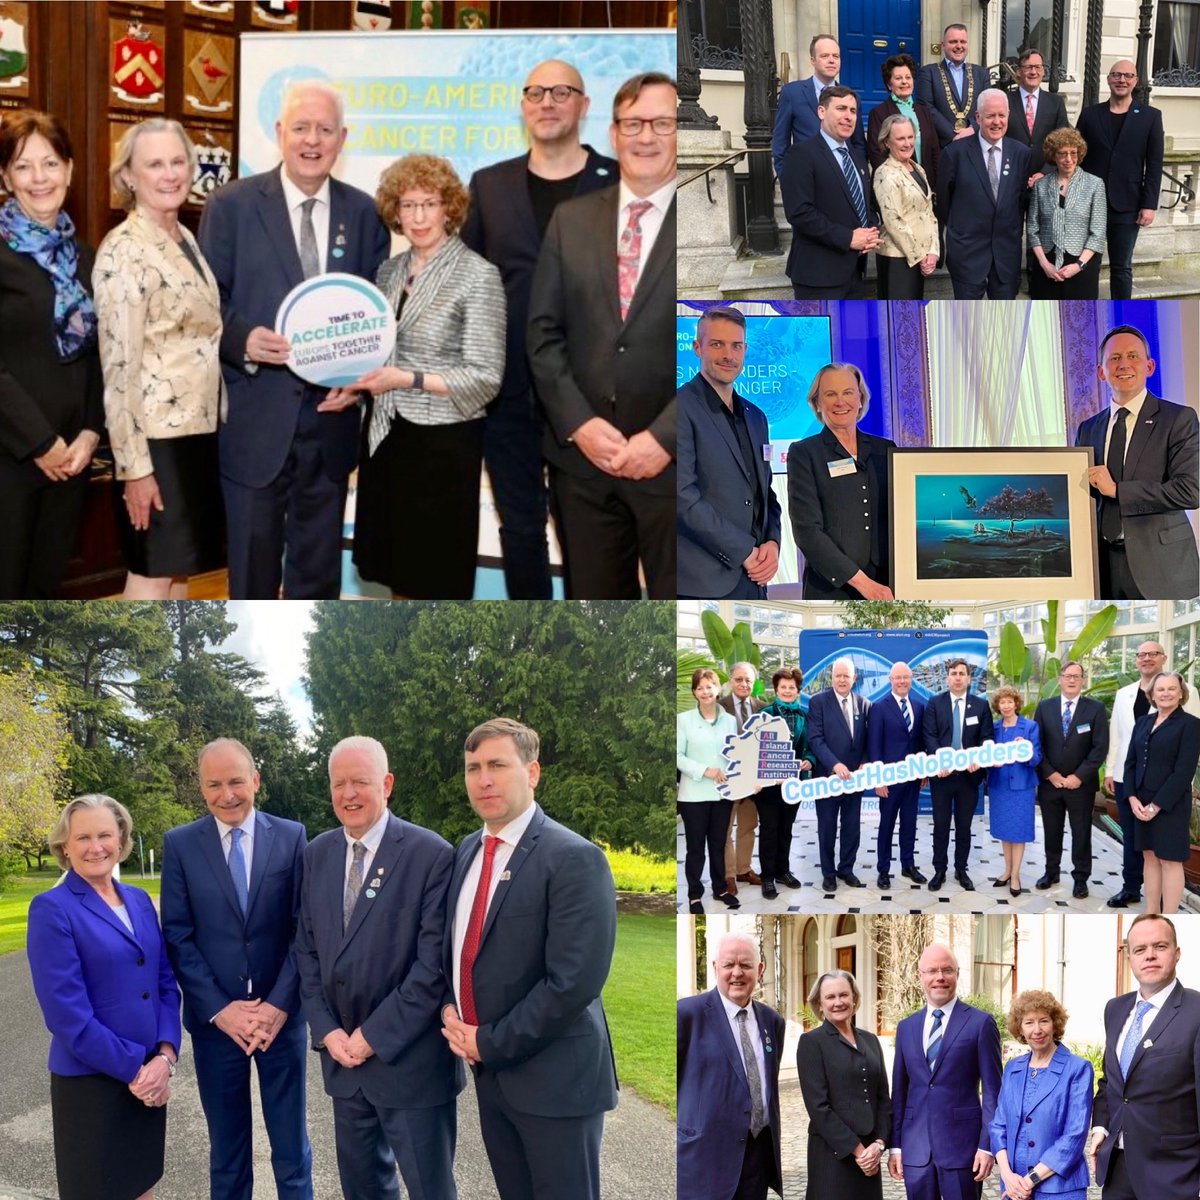 Impressive support of #EuroAmericanCancerFourm2024 by govt officials- Lord Mayor of Dublin, Irish Tanaiste & Minister Foreign Affairs @MichealMartinTD, Irish MOH @DonnellyStephen, & @USEmbassyDublin. @ASCOPres @QUBCancerProf @asco @EuropeanCancer @AlCRIproject #CancerHasNoBorders